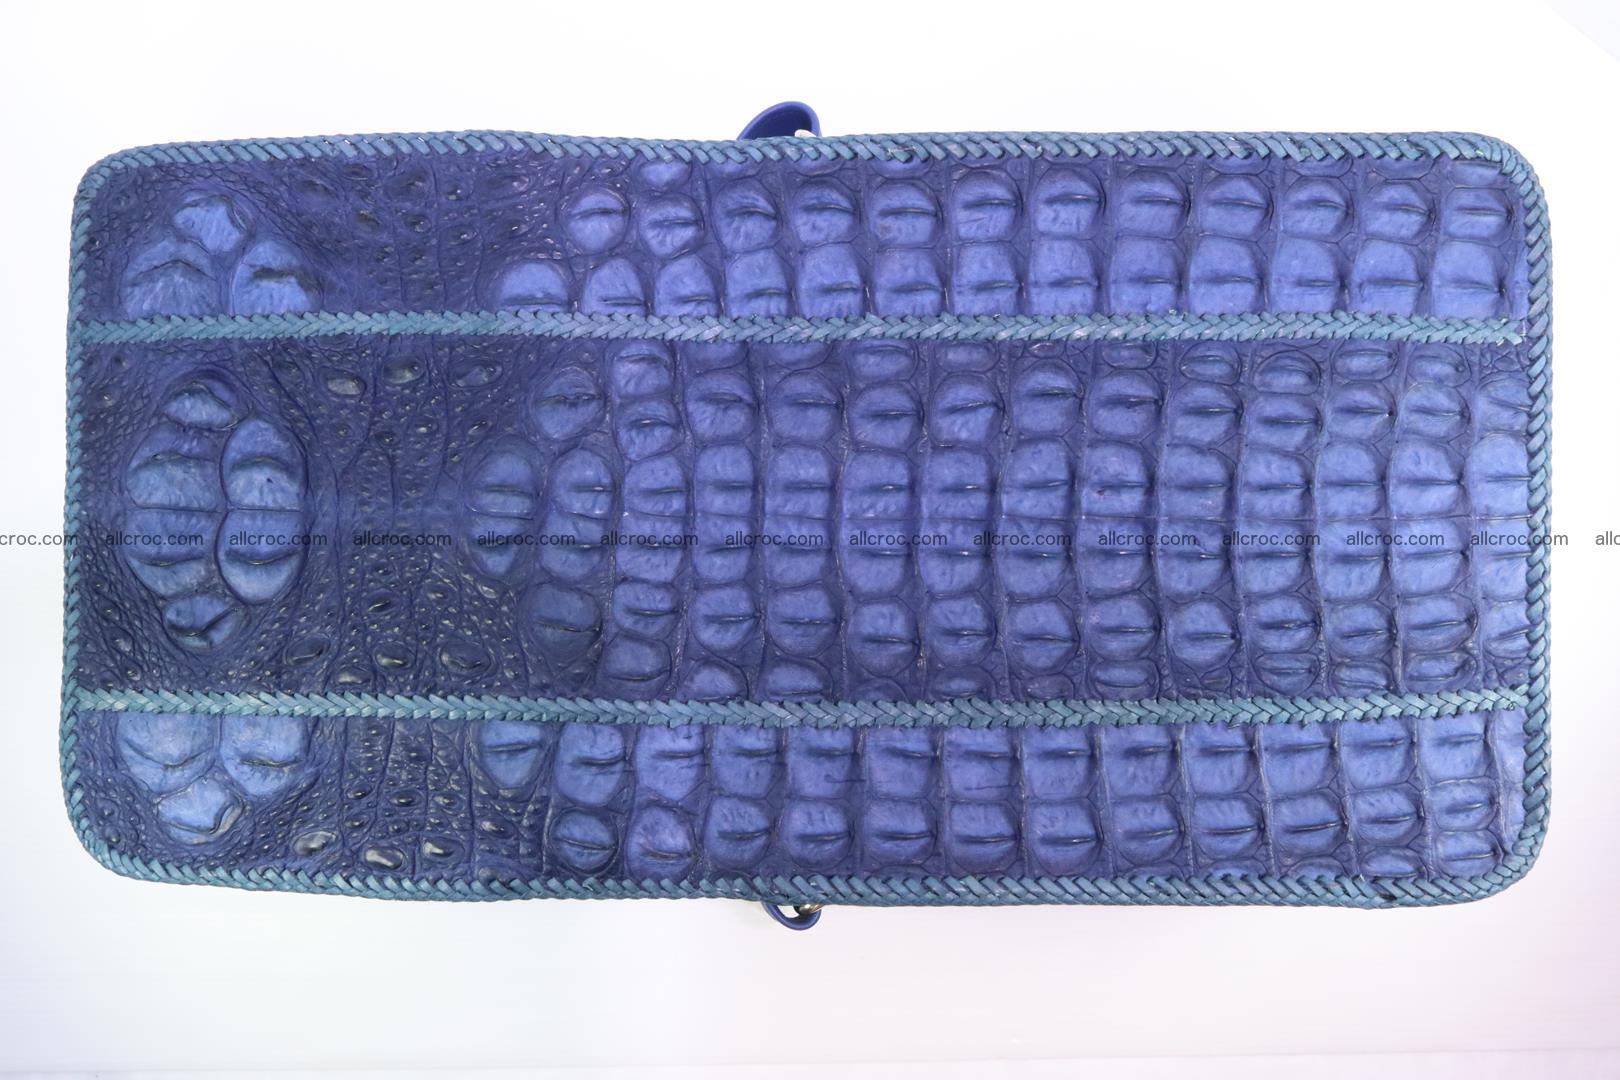 Сrocodile skin shoulder bag with braided edges 140 Foto 12